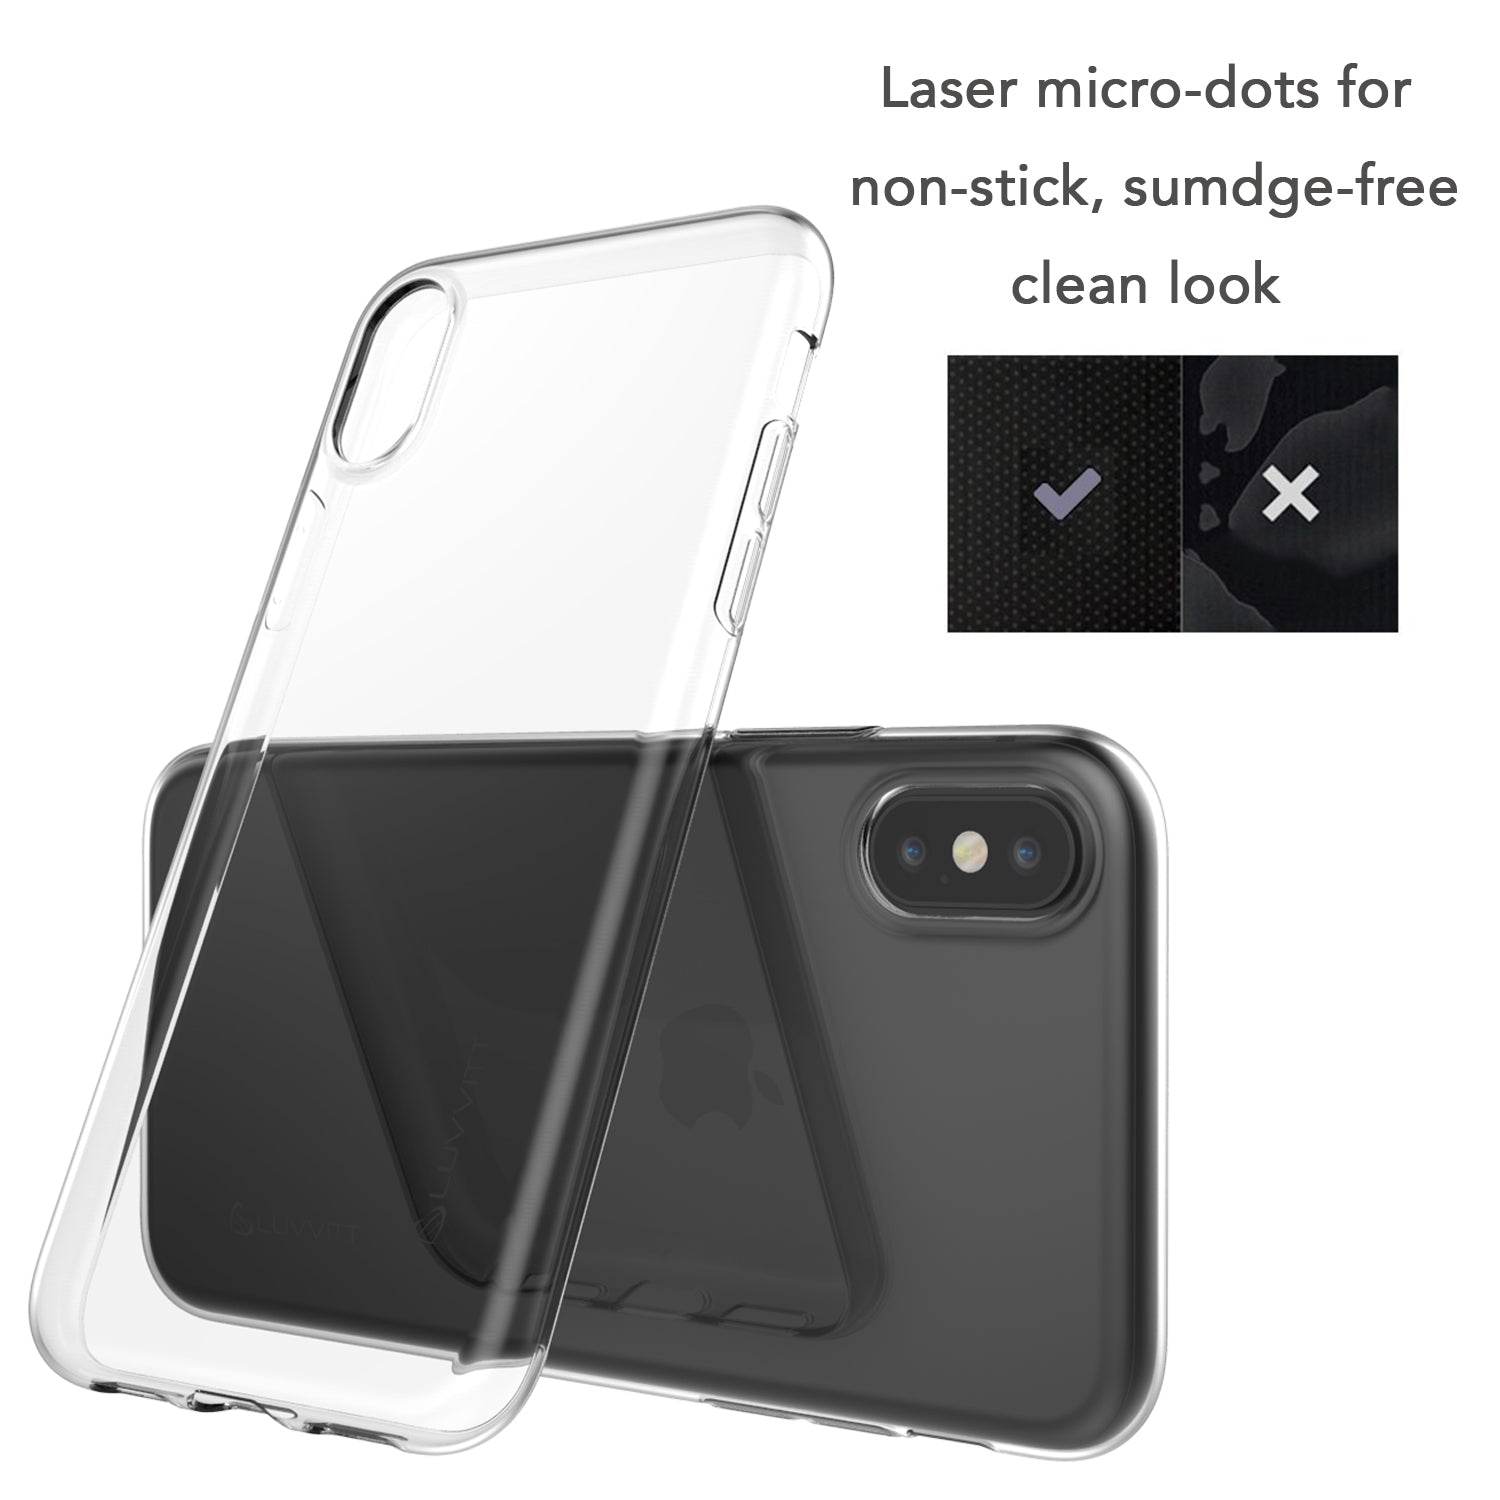 Luvvitt Clarity Case for iPhone XR TPU Flexible 6.1 inch Screen 2018 - Clear